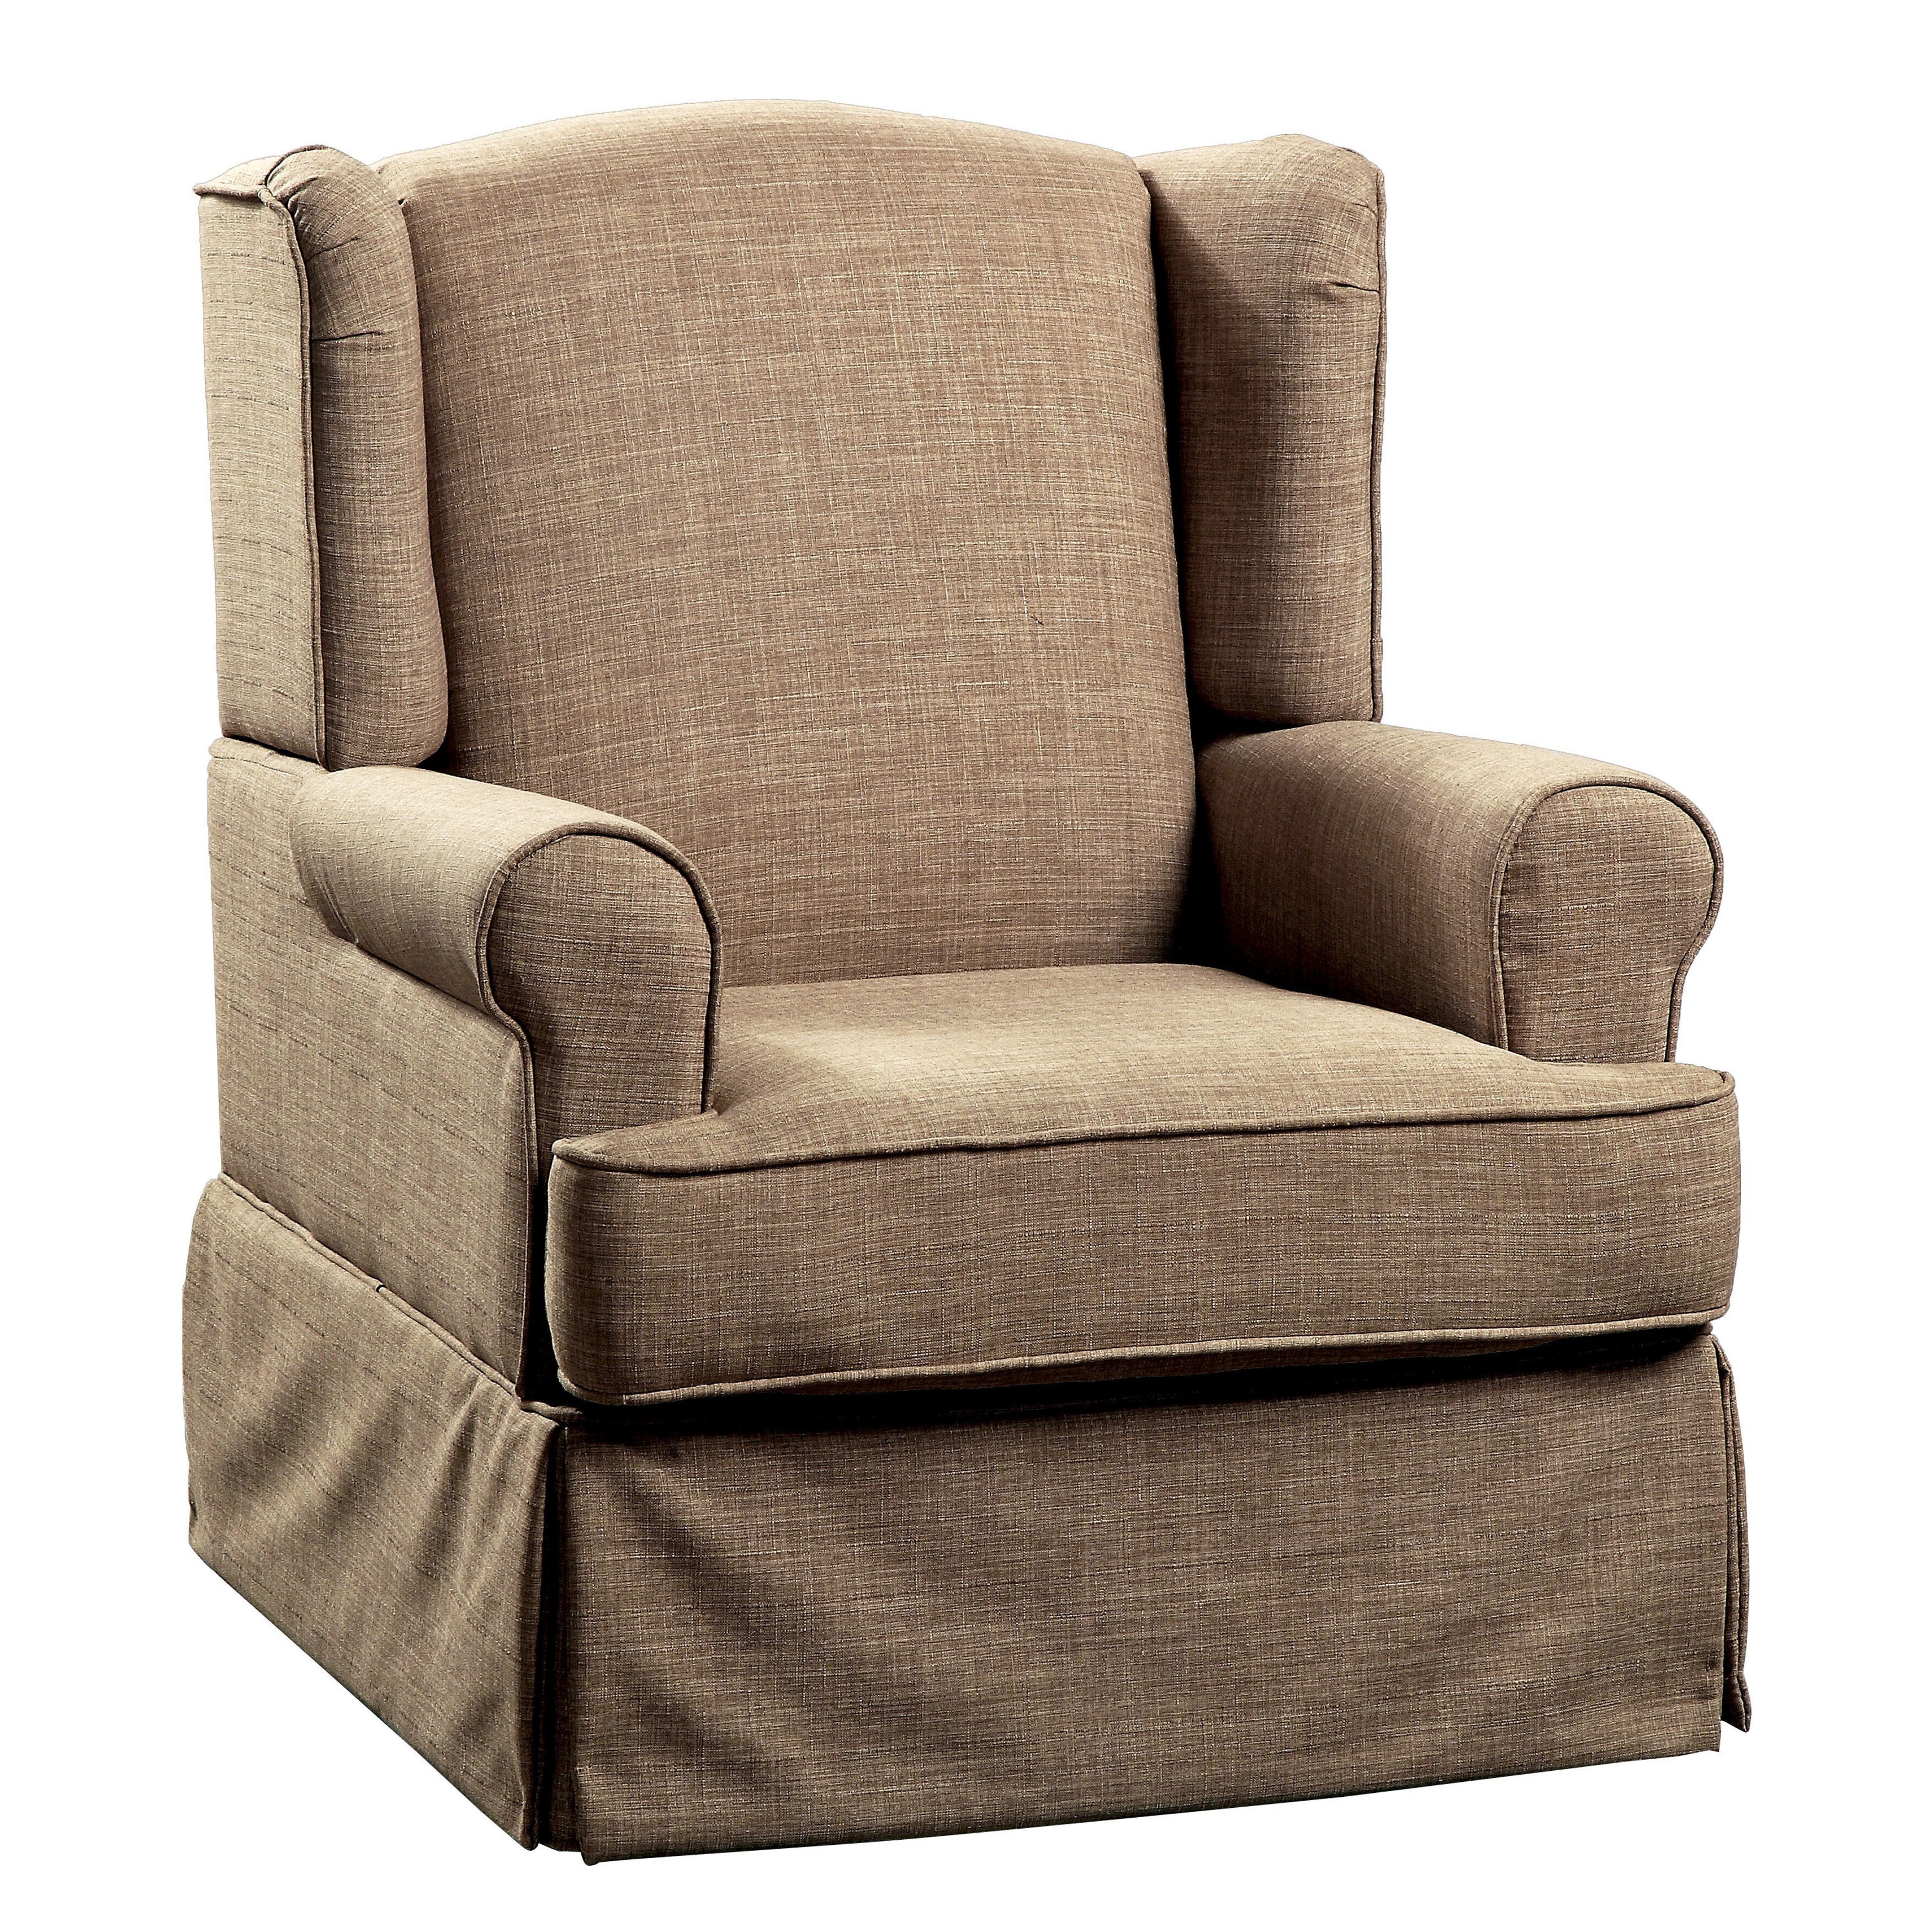 furniture of america keal transitional glider rocker chair